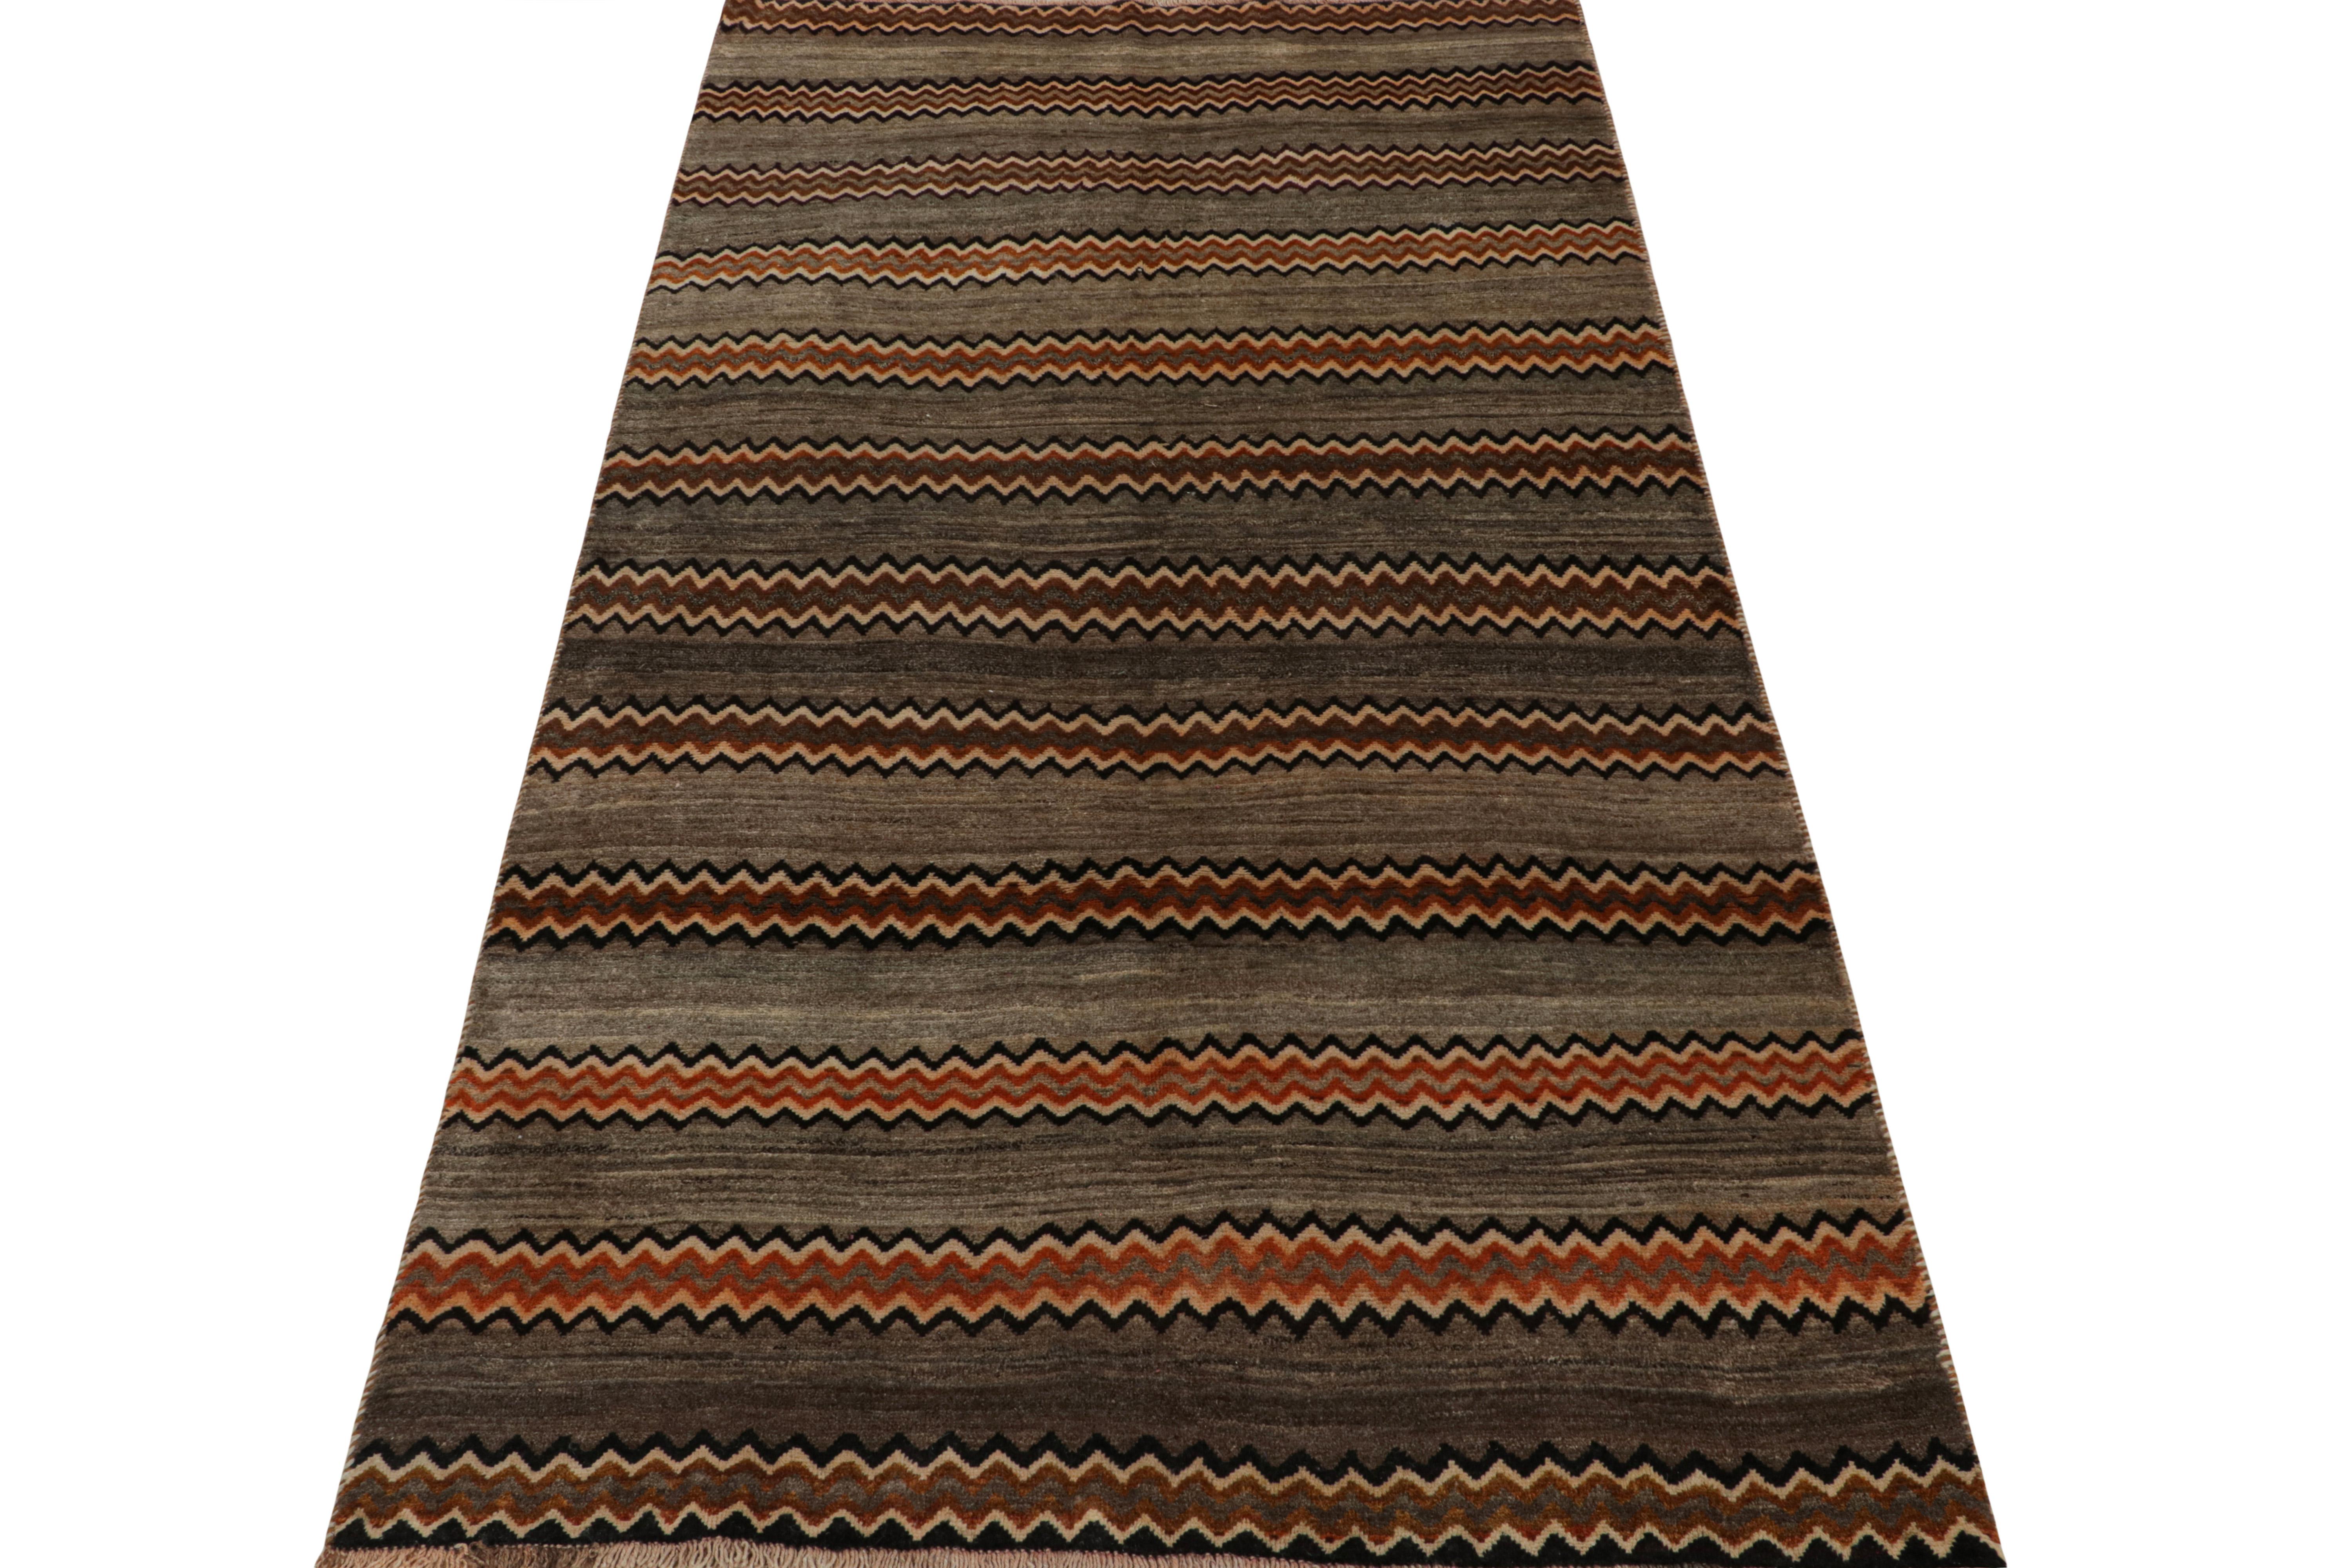 Turkish Vintage Gabbeh Tribal Rug in Gray & Beige-Brown Chevron Patterns by Rug & Kilim For Sale